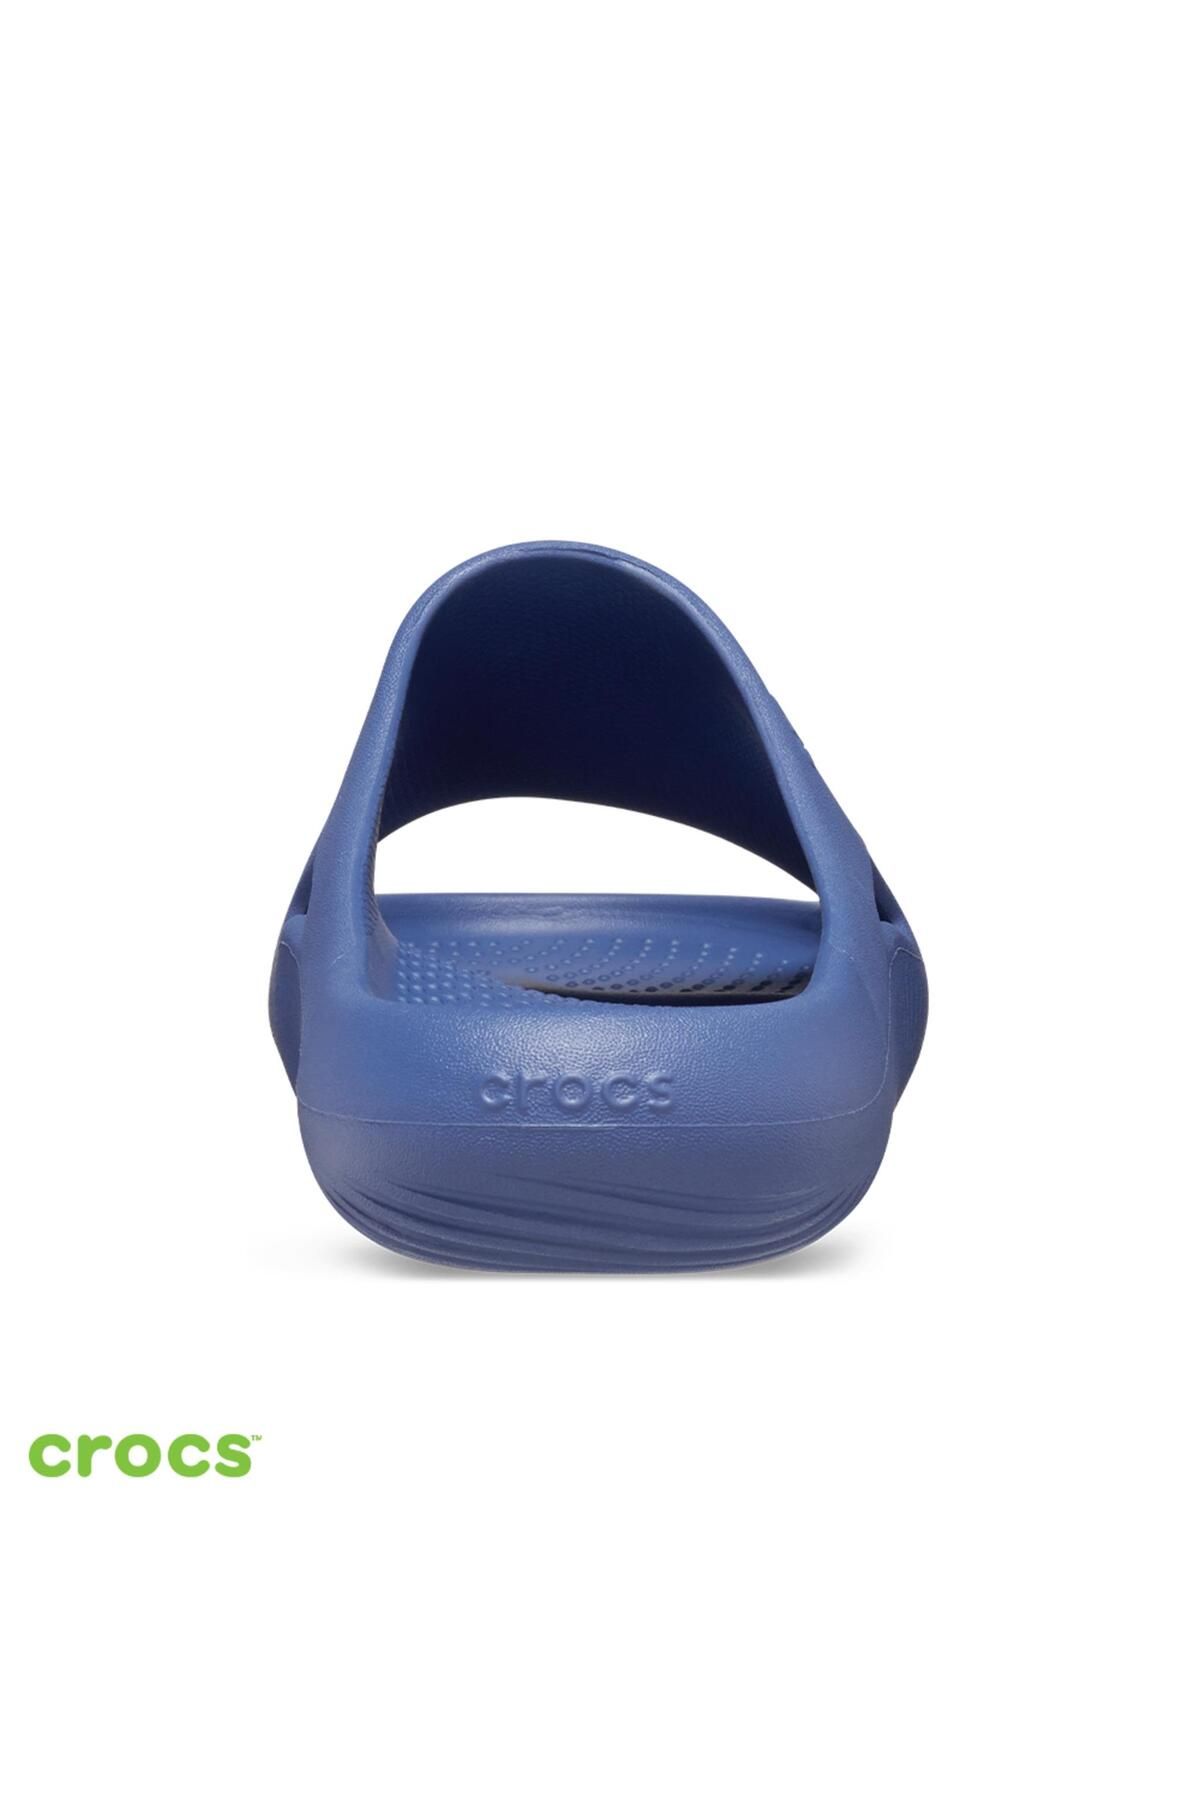 Crocs اسلاید ریکاوری مولک unisex 208392